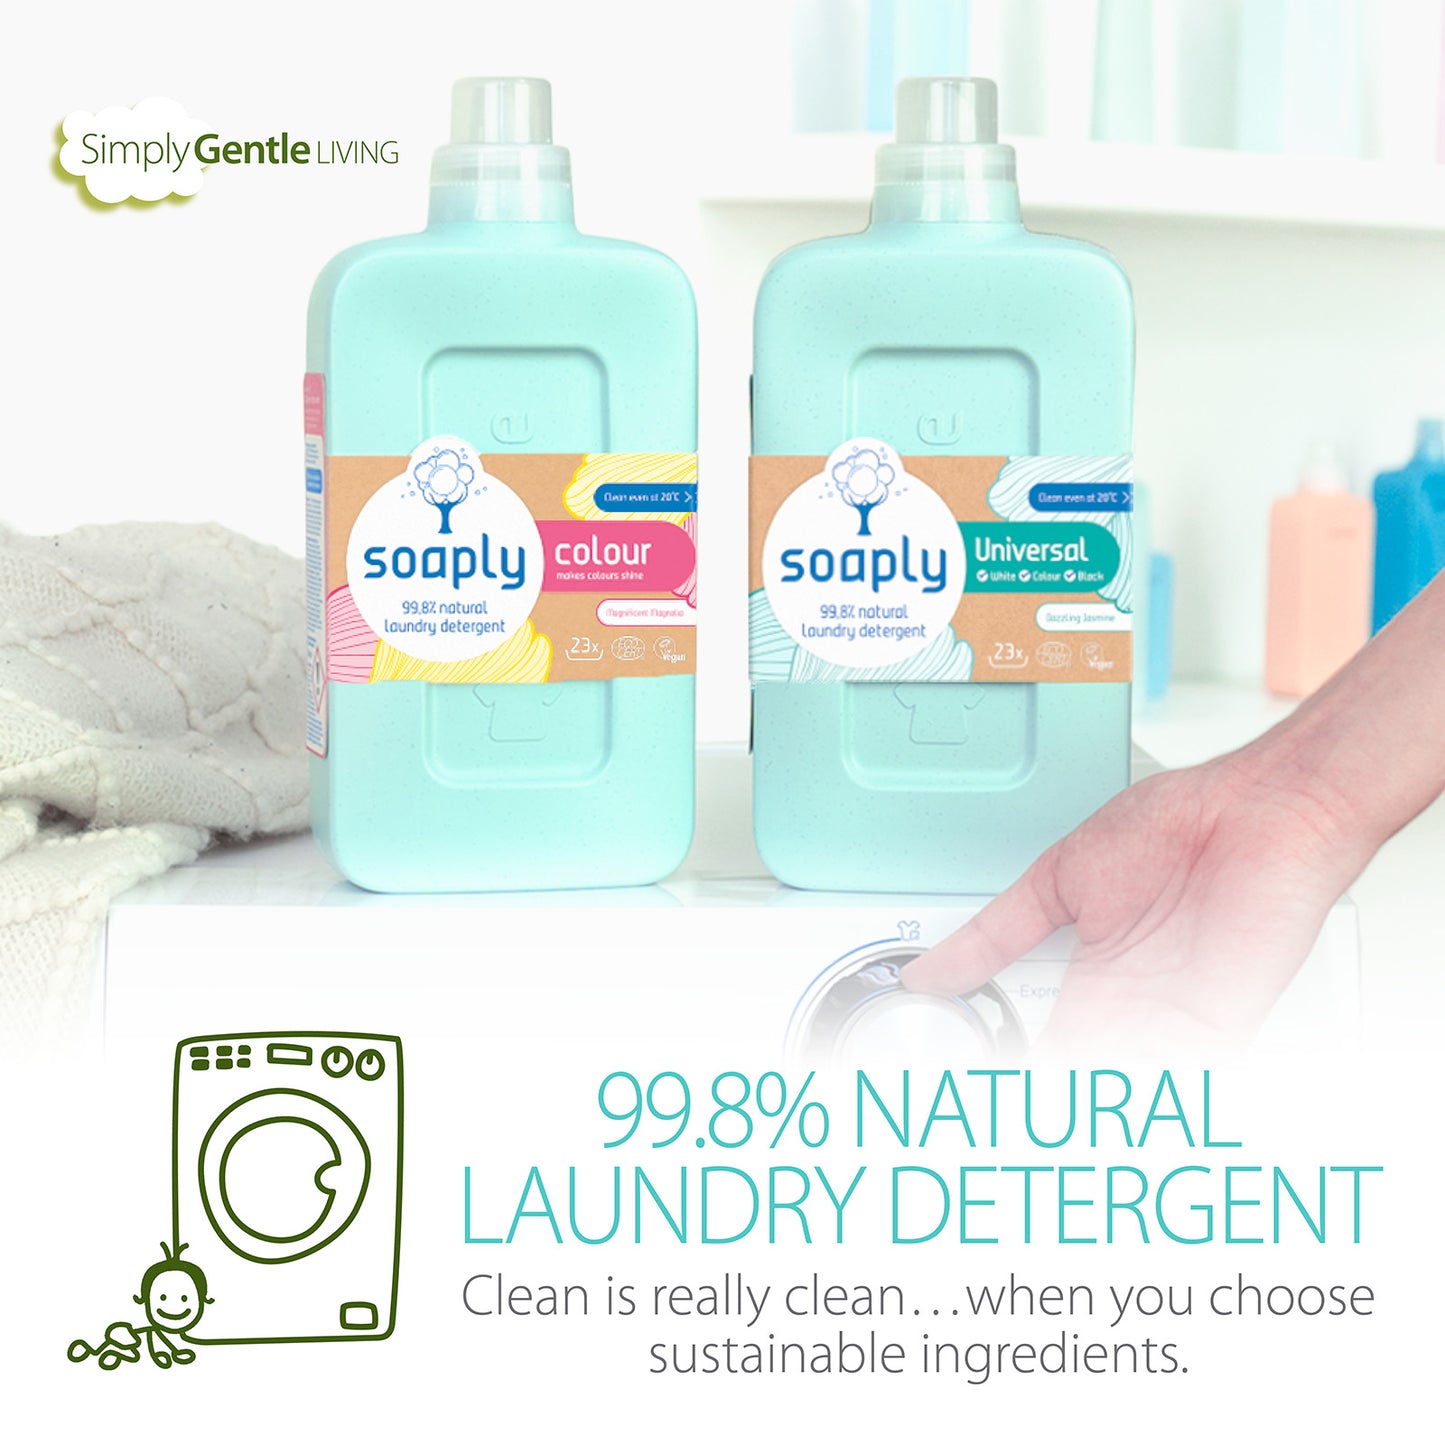 Natural laundry detergent